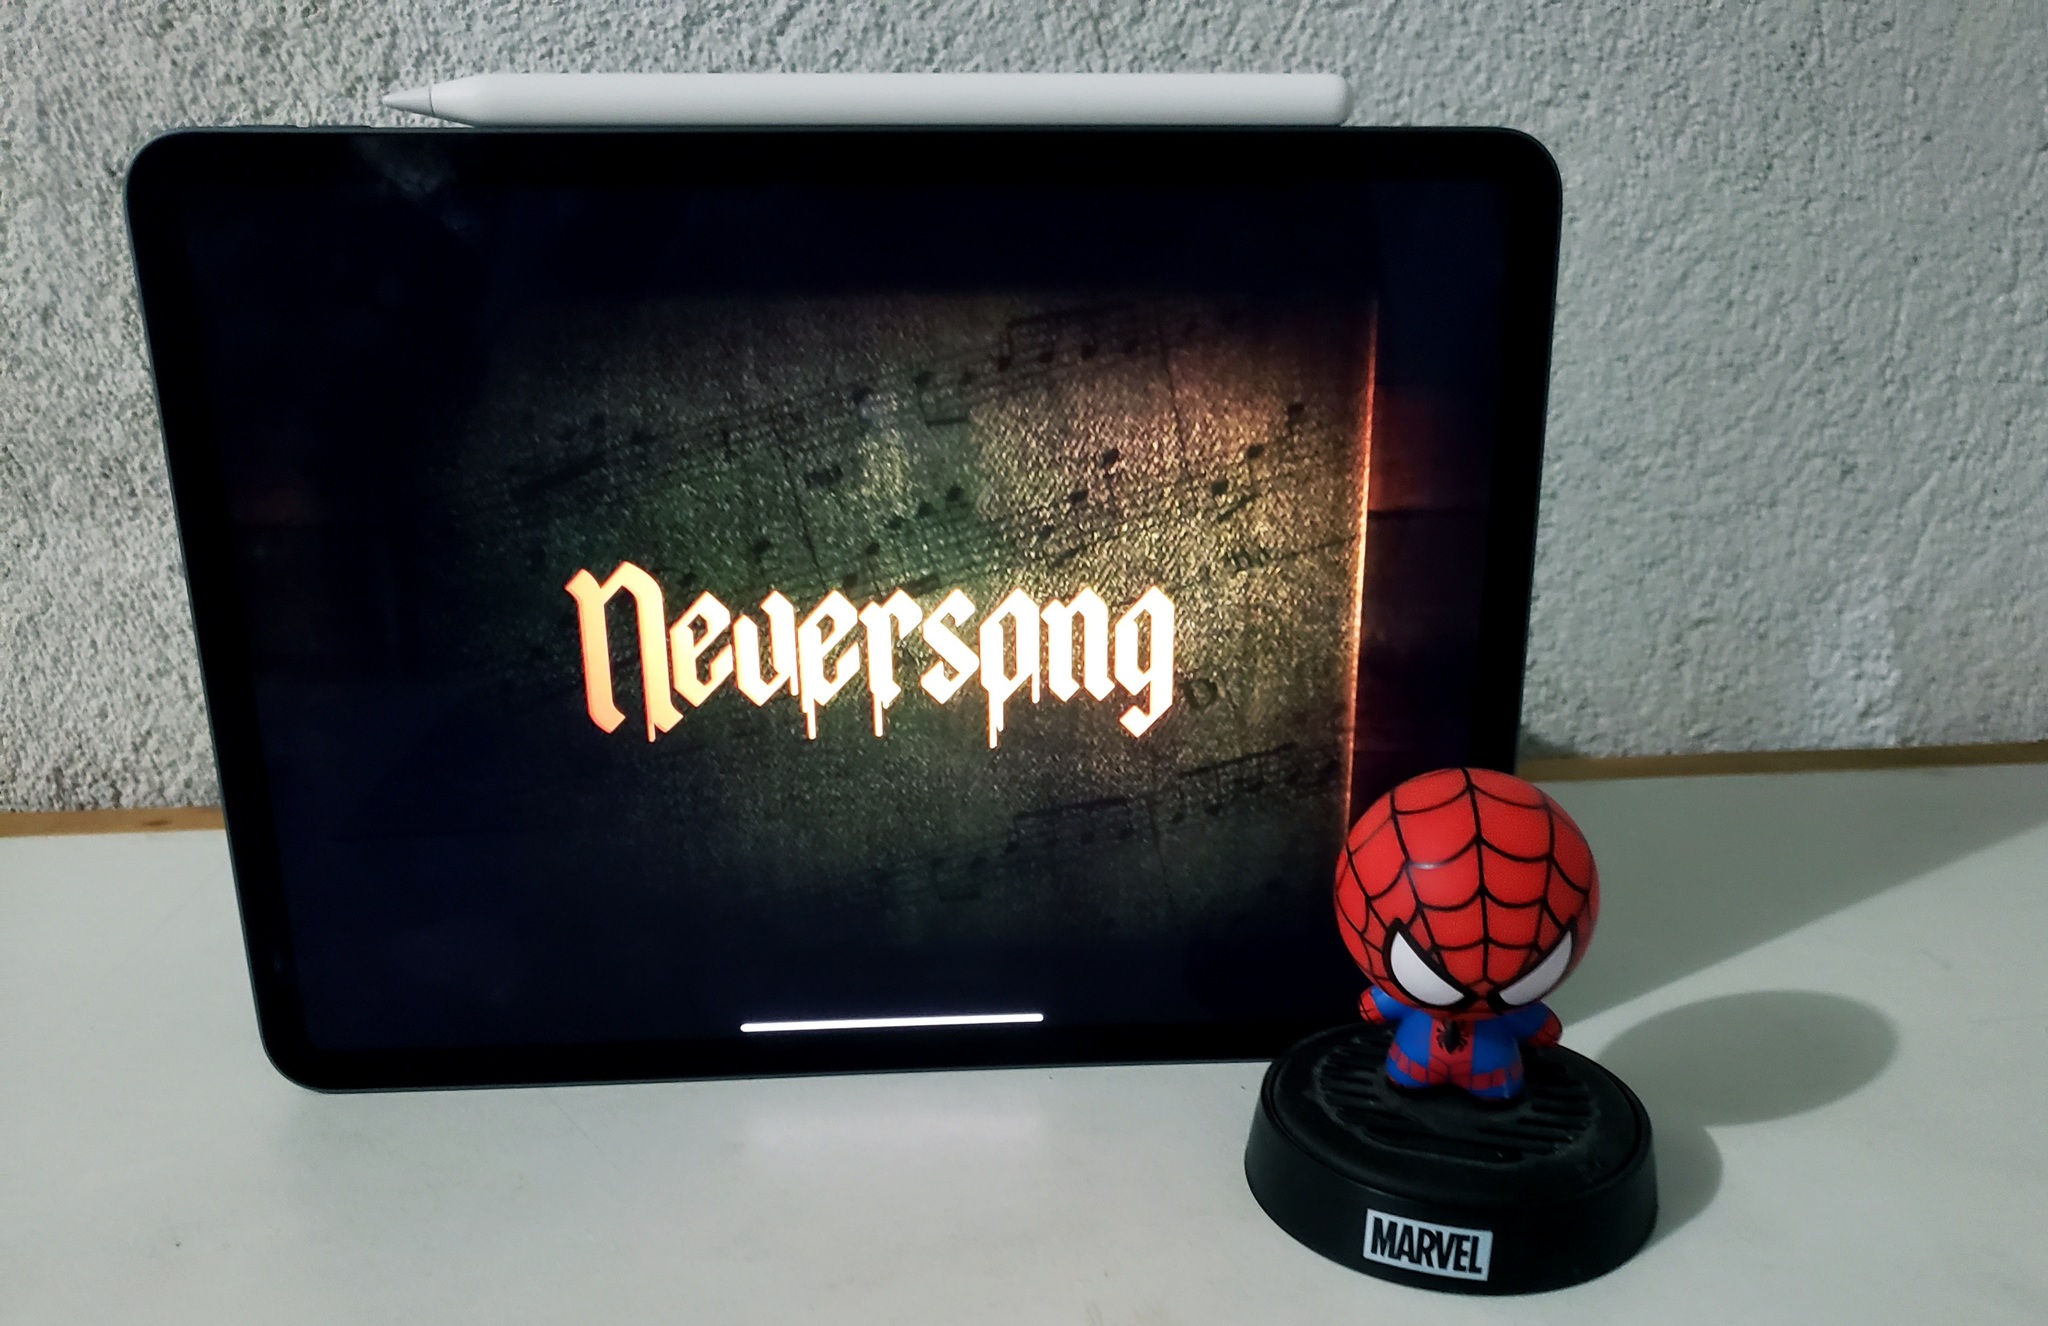 Ipad Pro Neversong Hero Image